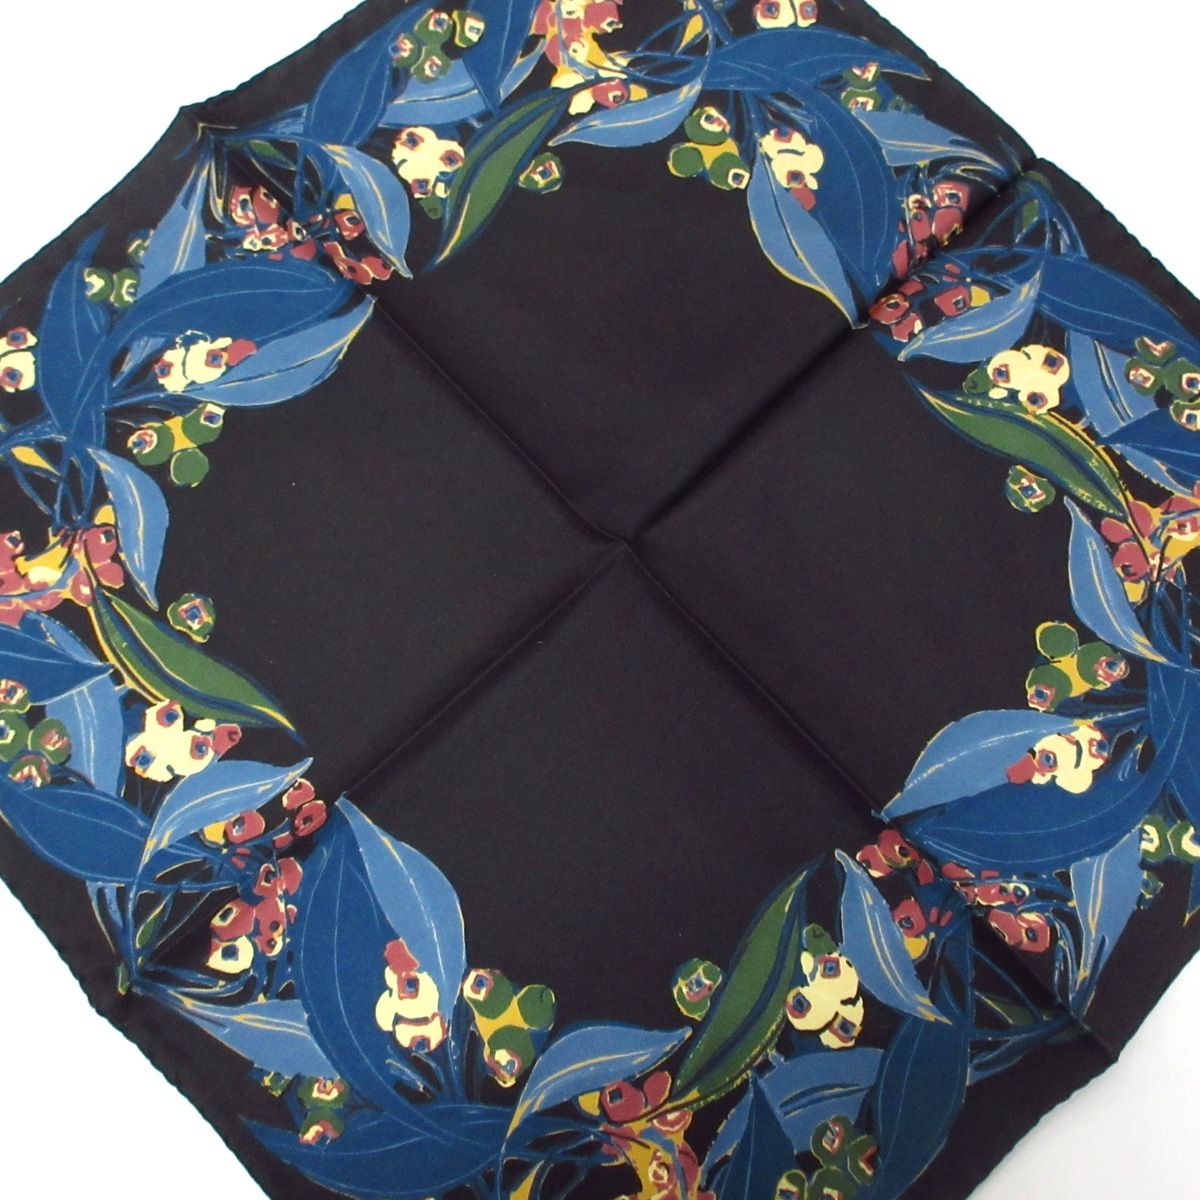 LANVIN(ランバン) スカーフ美品 - 黒×ブルーグレー×マルチ 花柄 - メルカリ